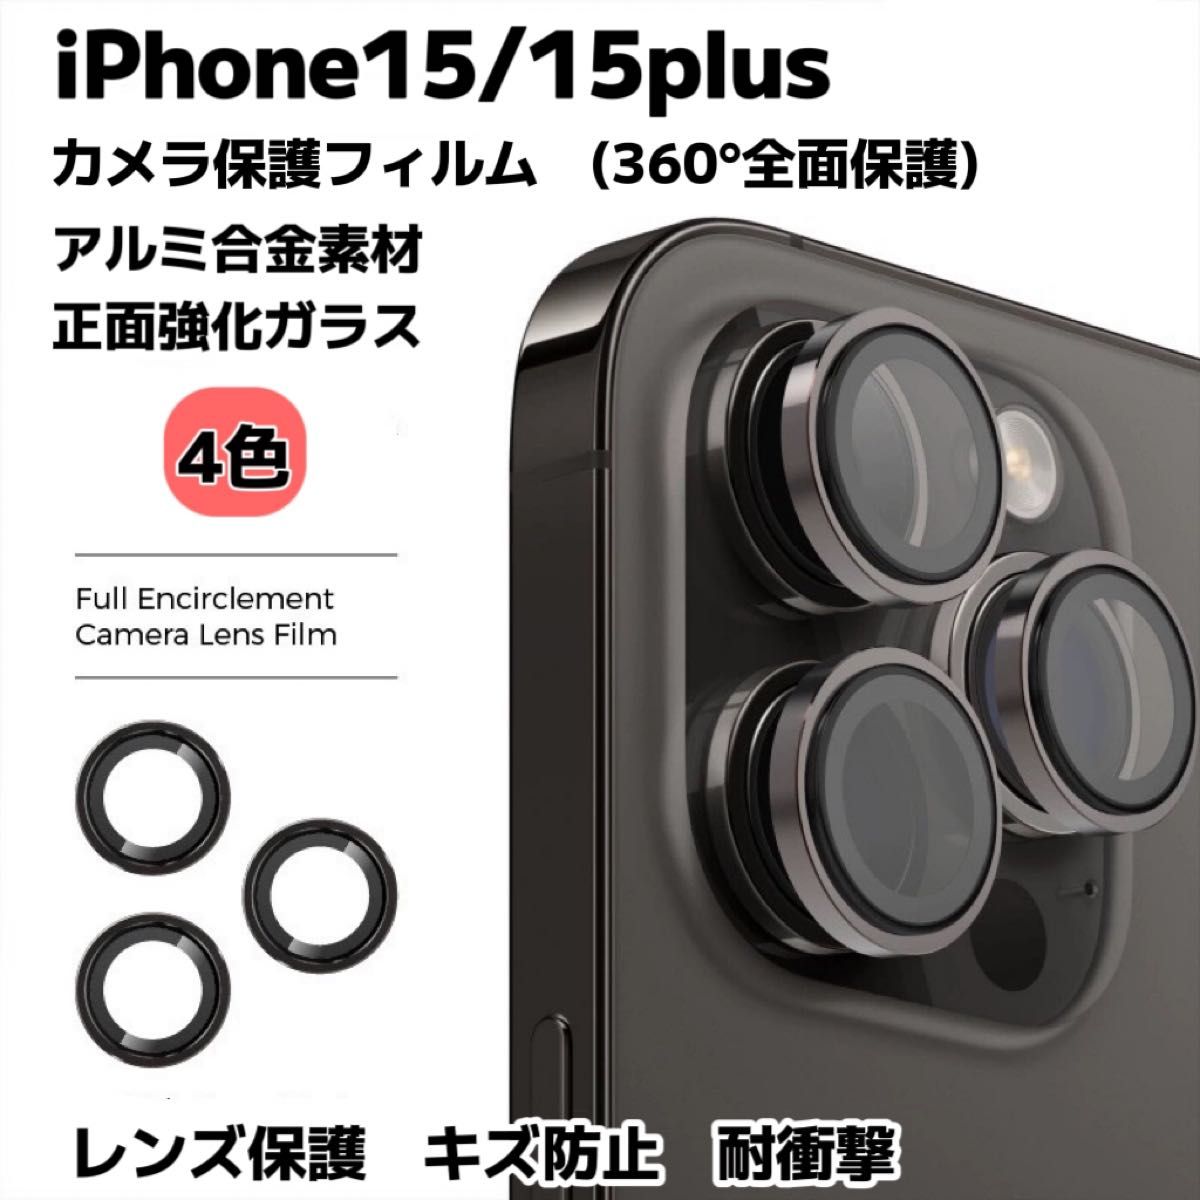 iPhone15/15plus カメラ保護フィルム スマホカメラレンズ ガラスレンズ保護カバー 全面保護 キズ防止 4色